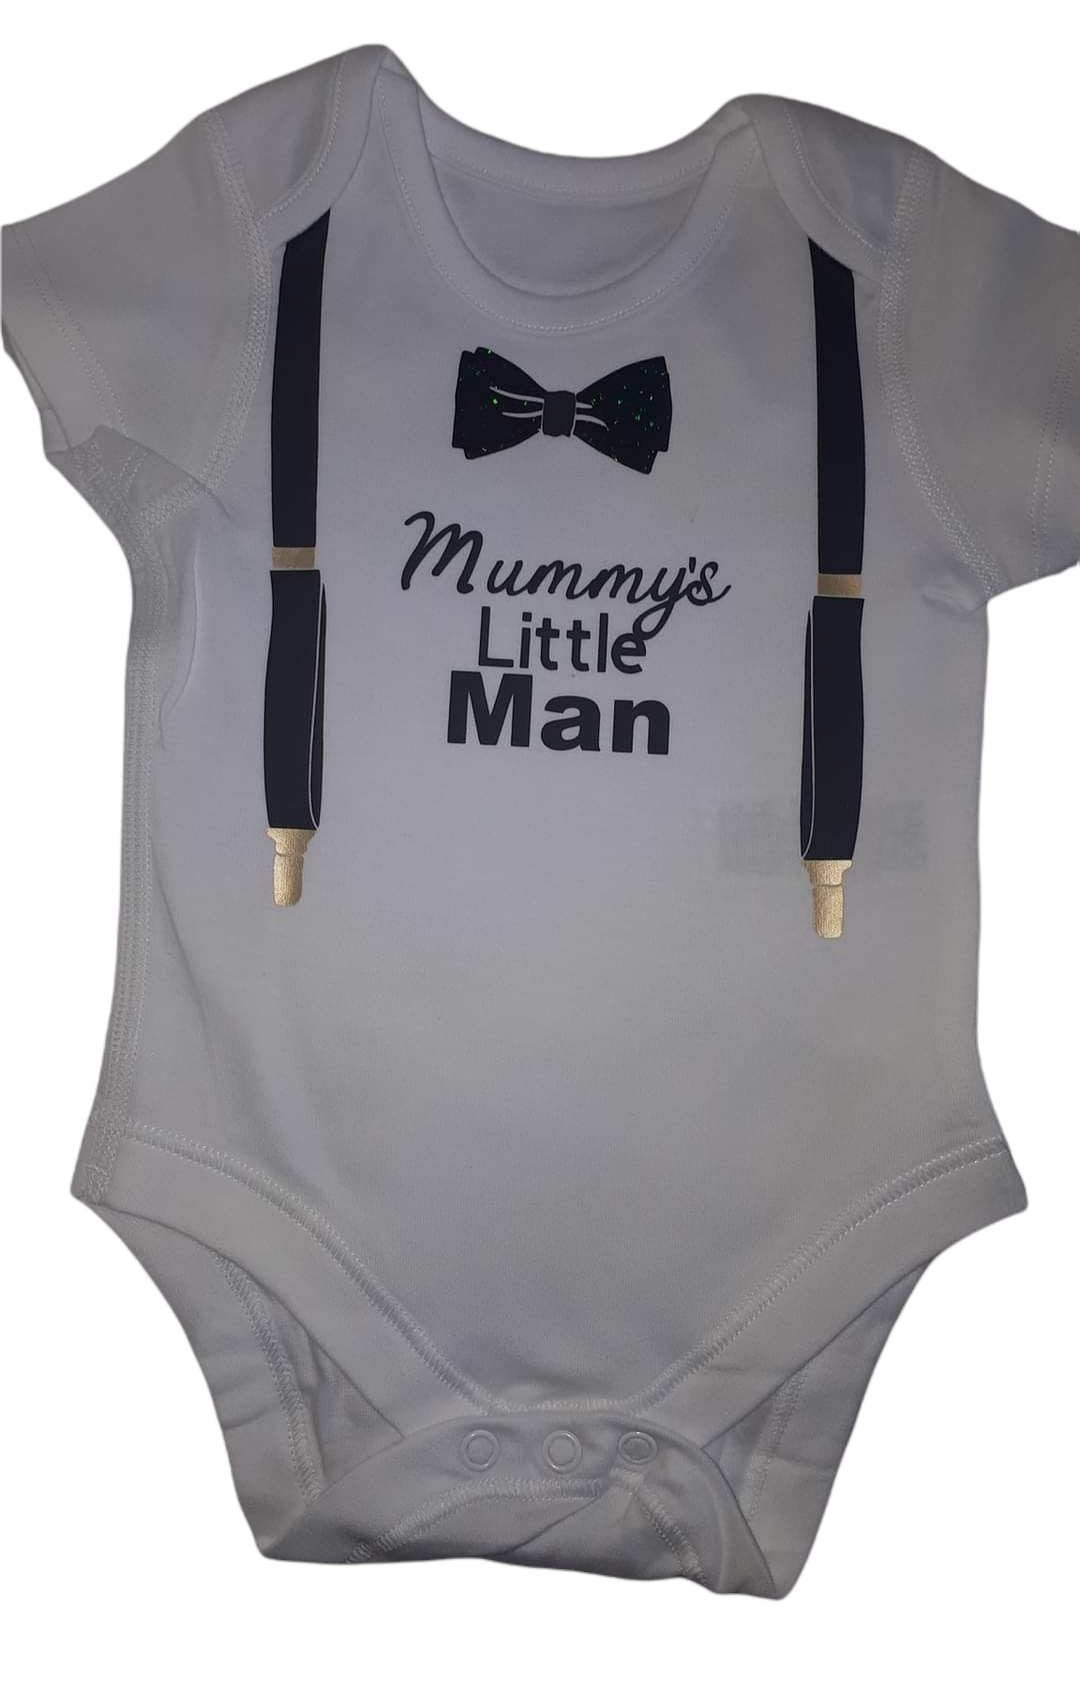 Mummy little man vest